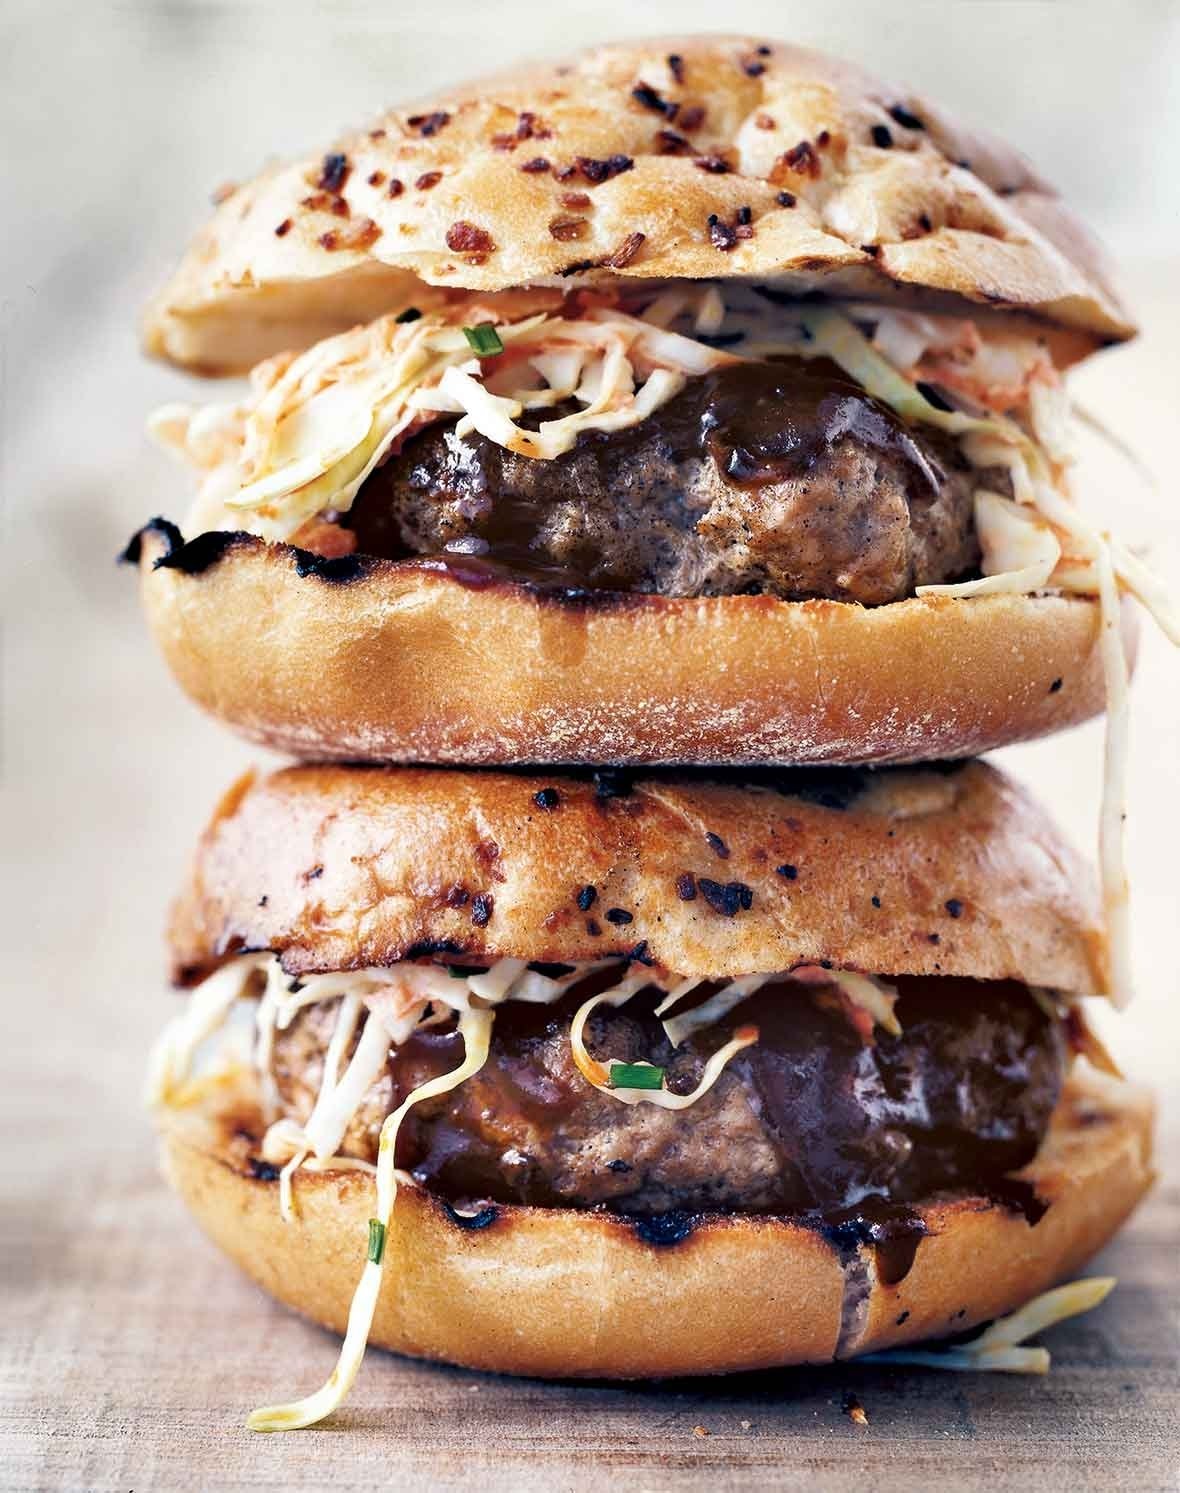 10 Attractive Burger Ideas For The Grill barbecue pork burgers recipe leites culinaria 2022